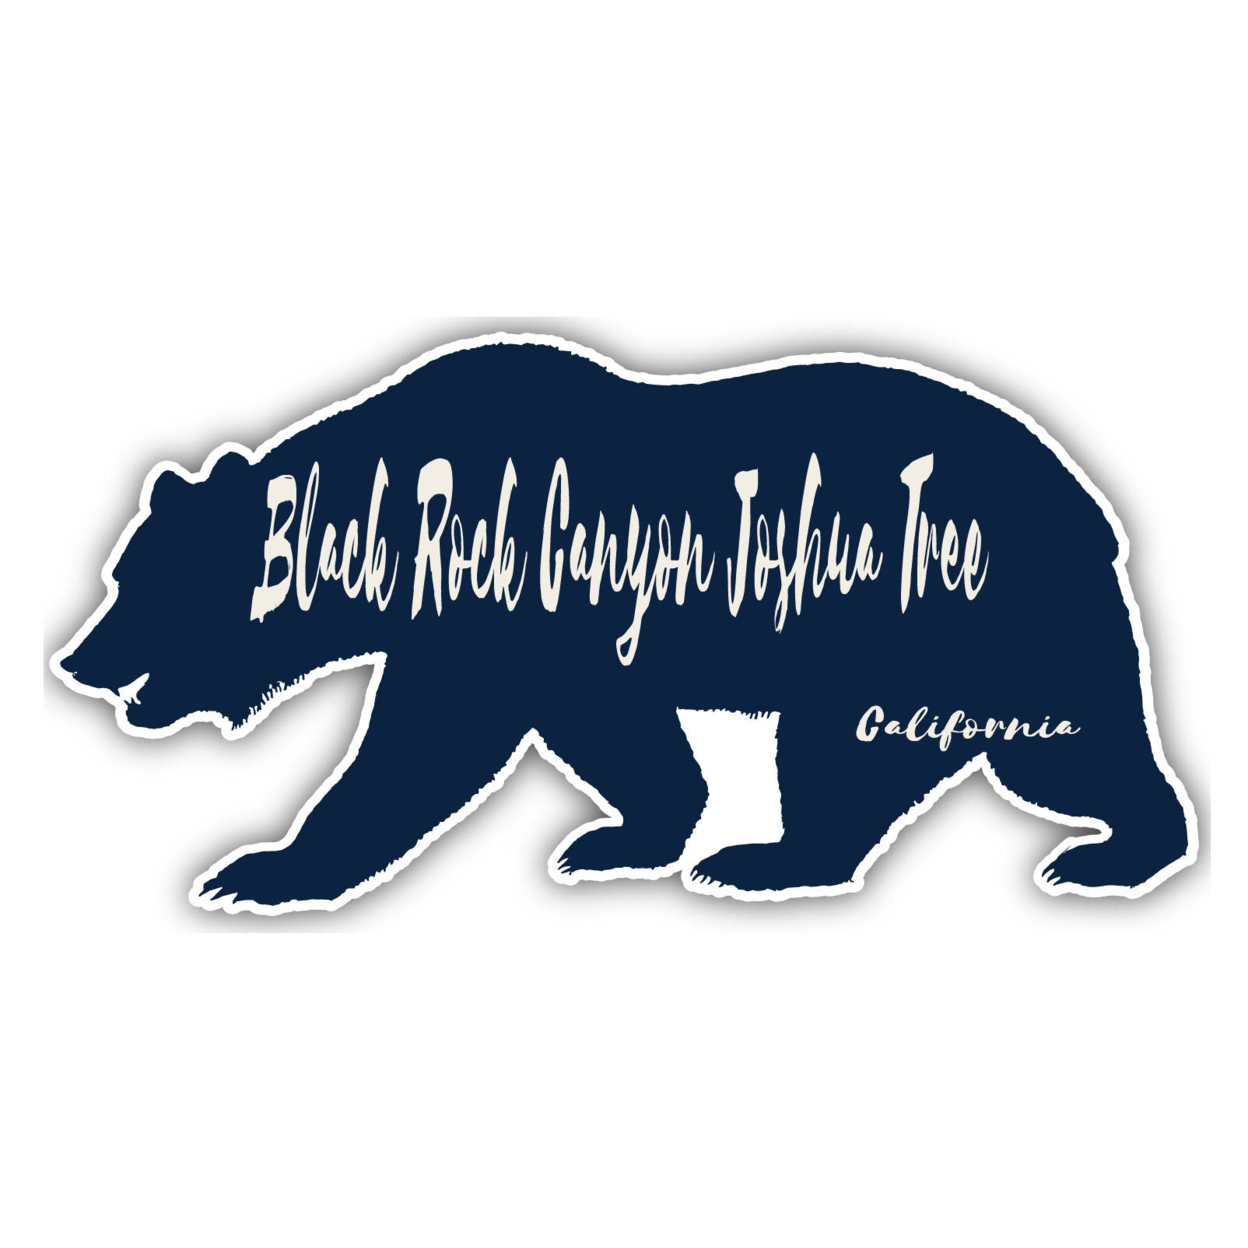 Black Rock Canyon Joshua Tree California Souvenir Decorative Stickers (Choose Theme And Size) - 4-Pack, 10-Inch, Bear